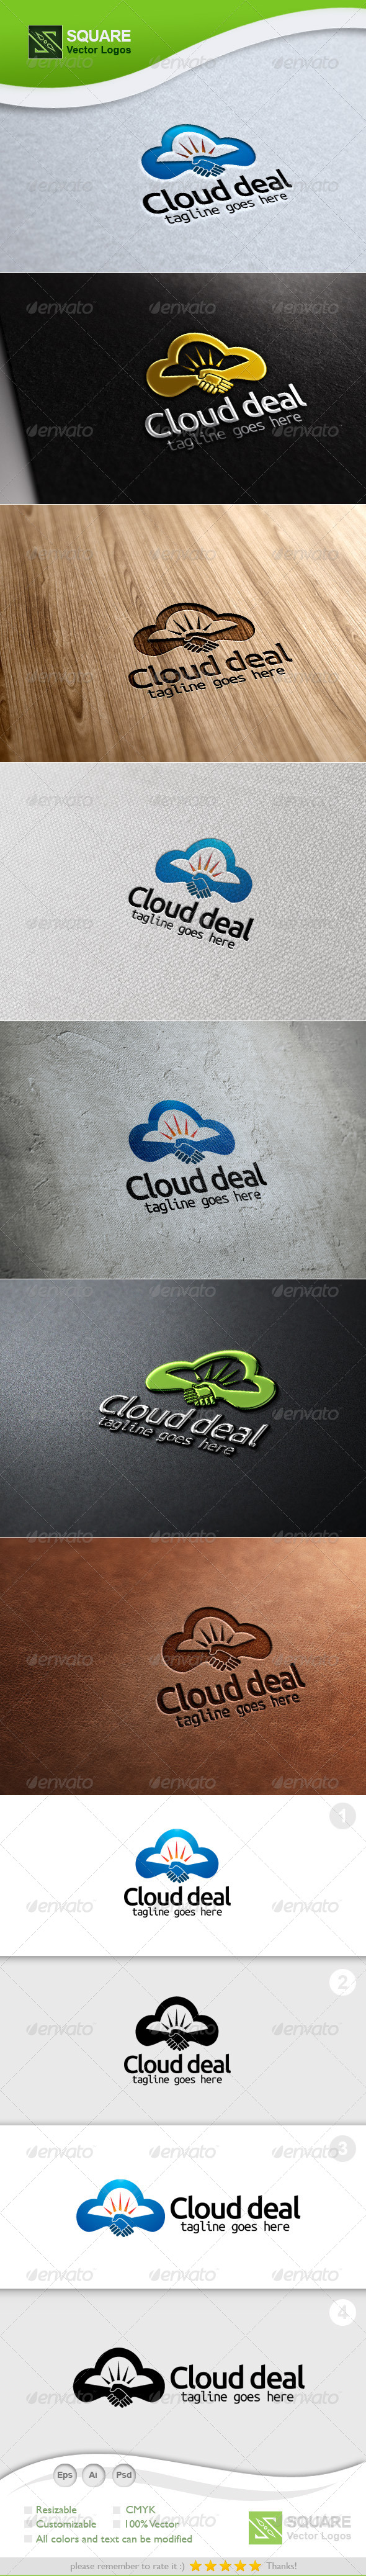 Cloud, Deal Vector Logo Template